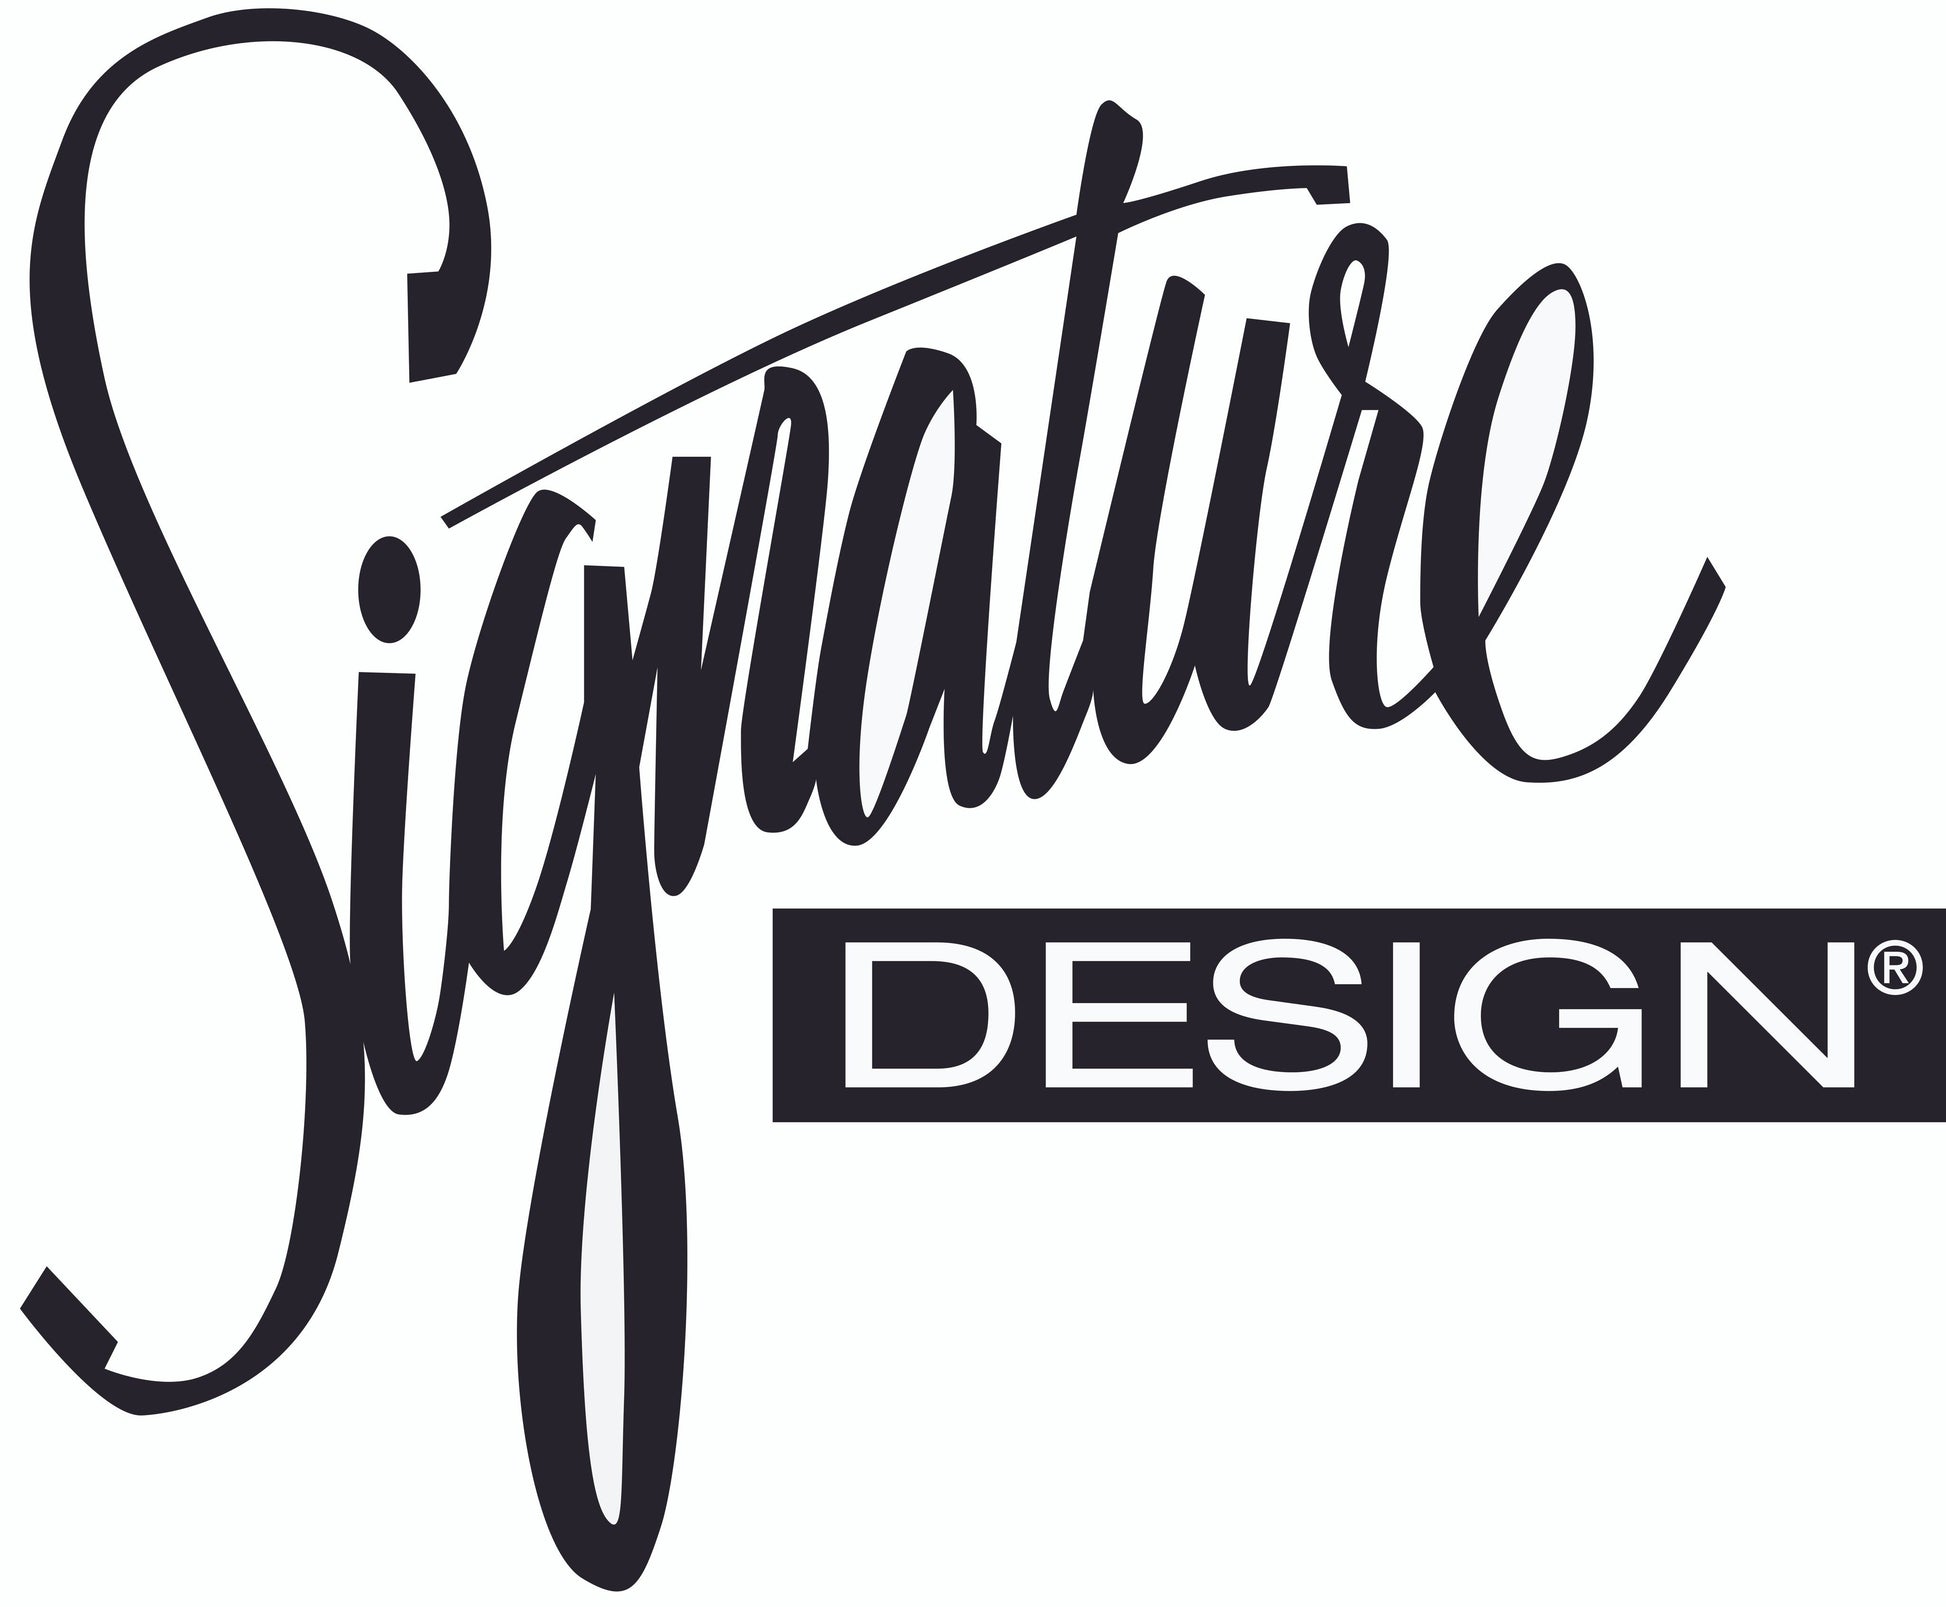 Gleston Chair Signature Design by Ashley®